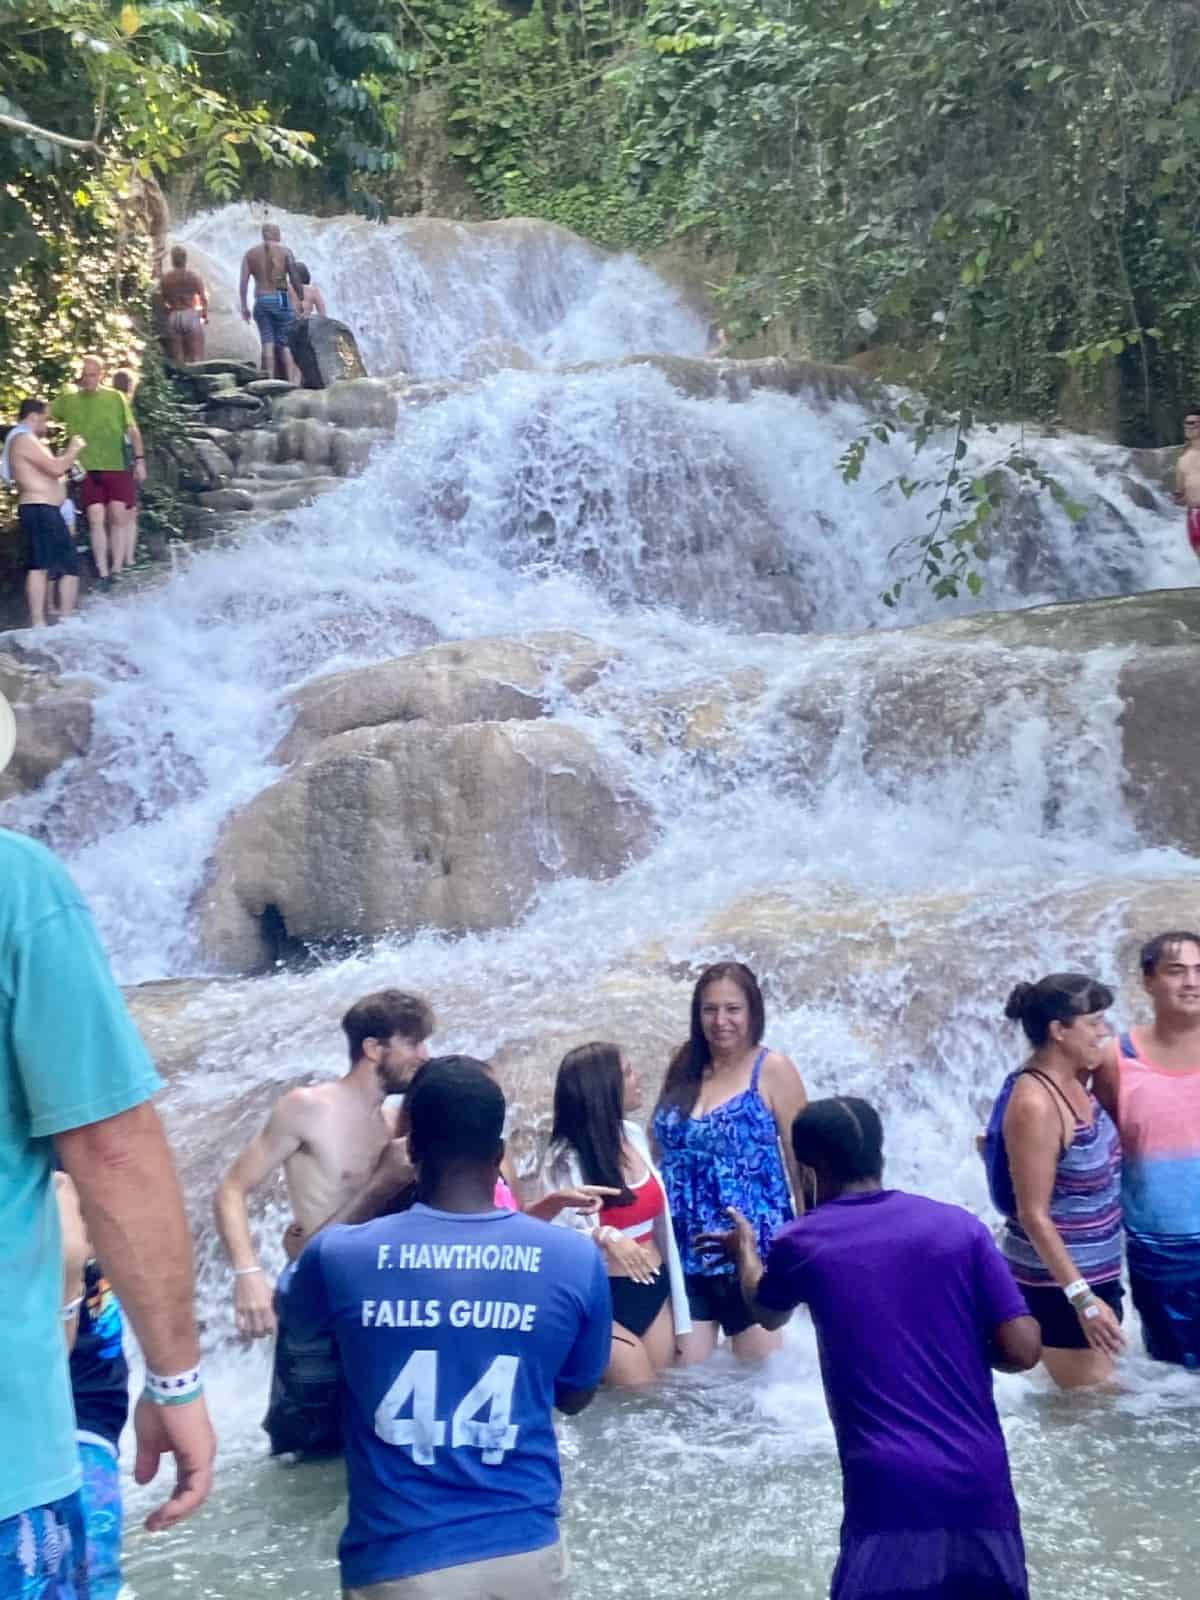 Visiting Dunn's River Falls in Jamaica